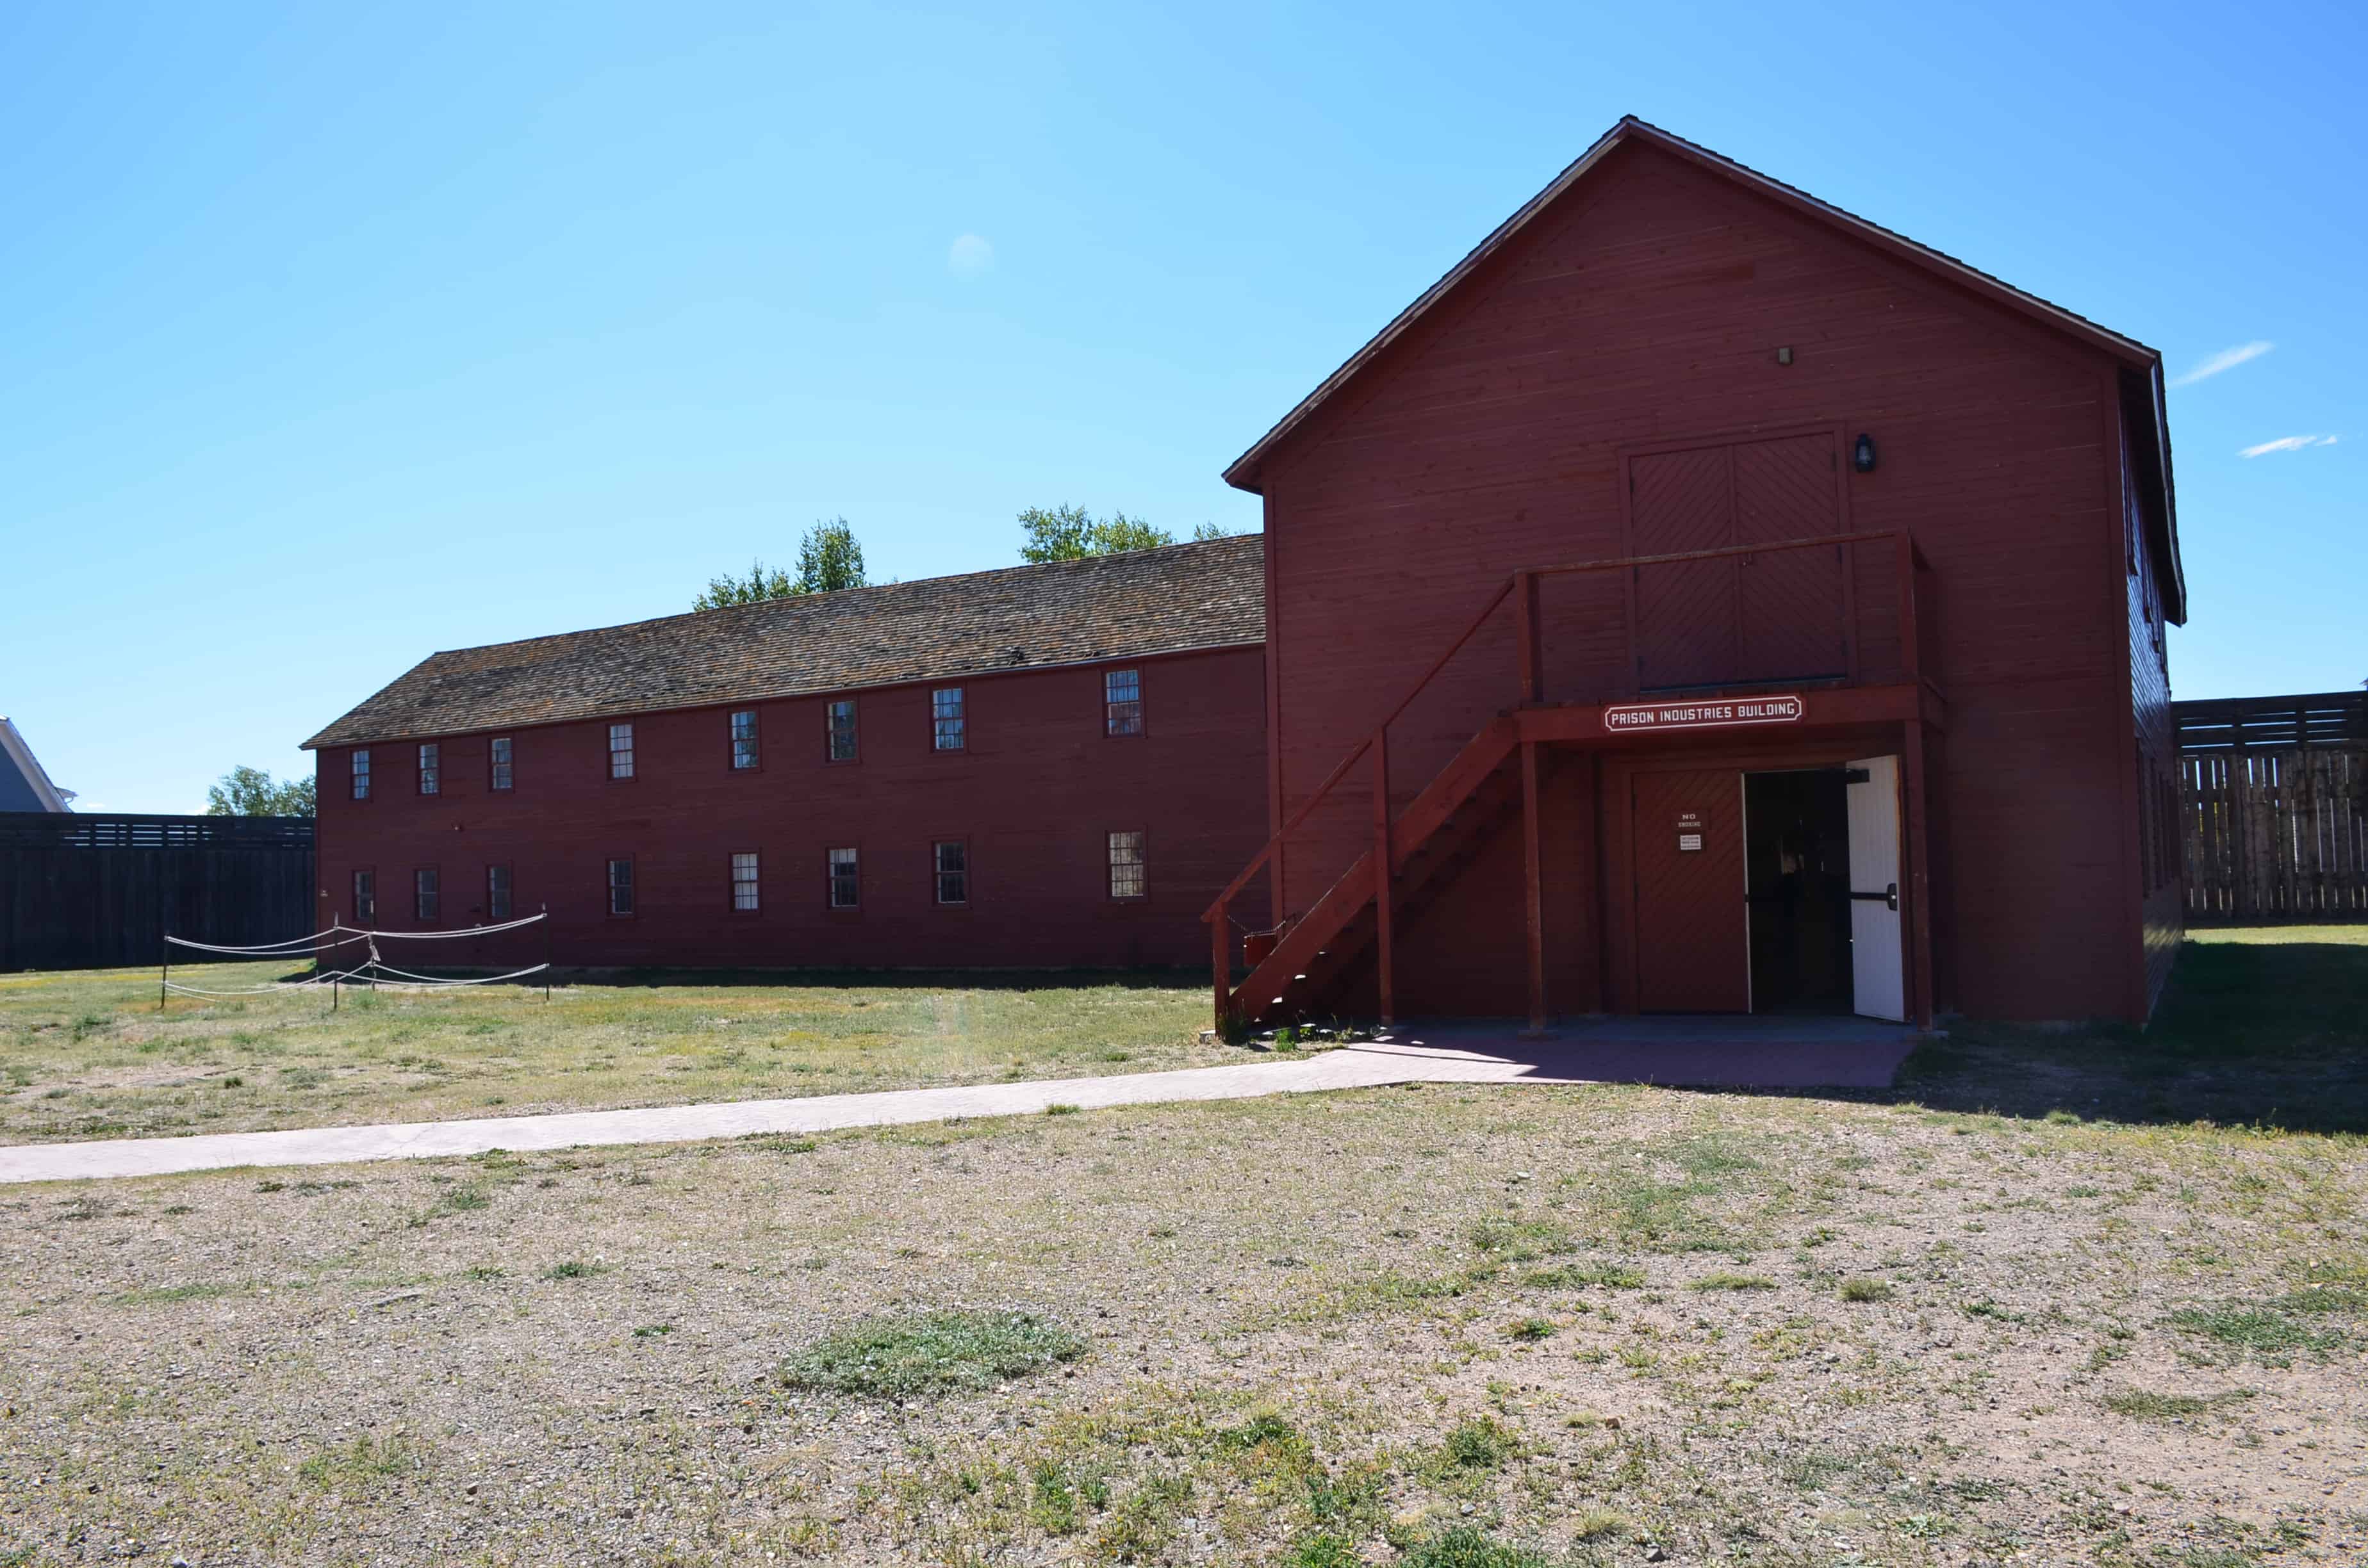 Workshop at Wyoming Territorial Prison State Historic Site in Laramie